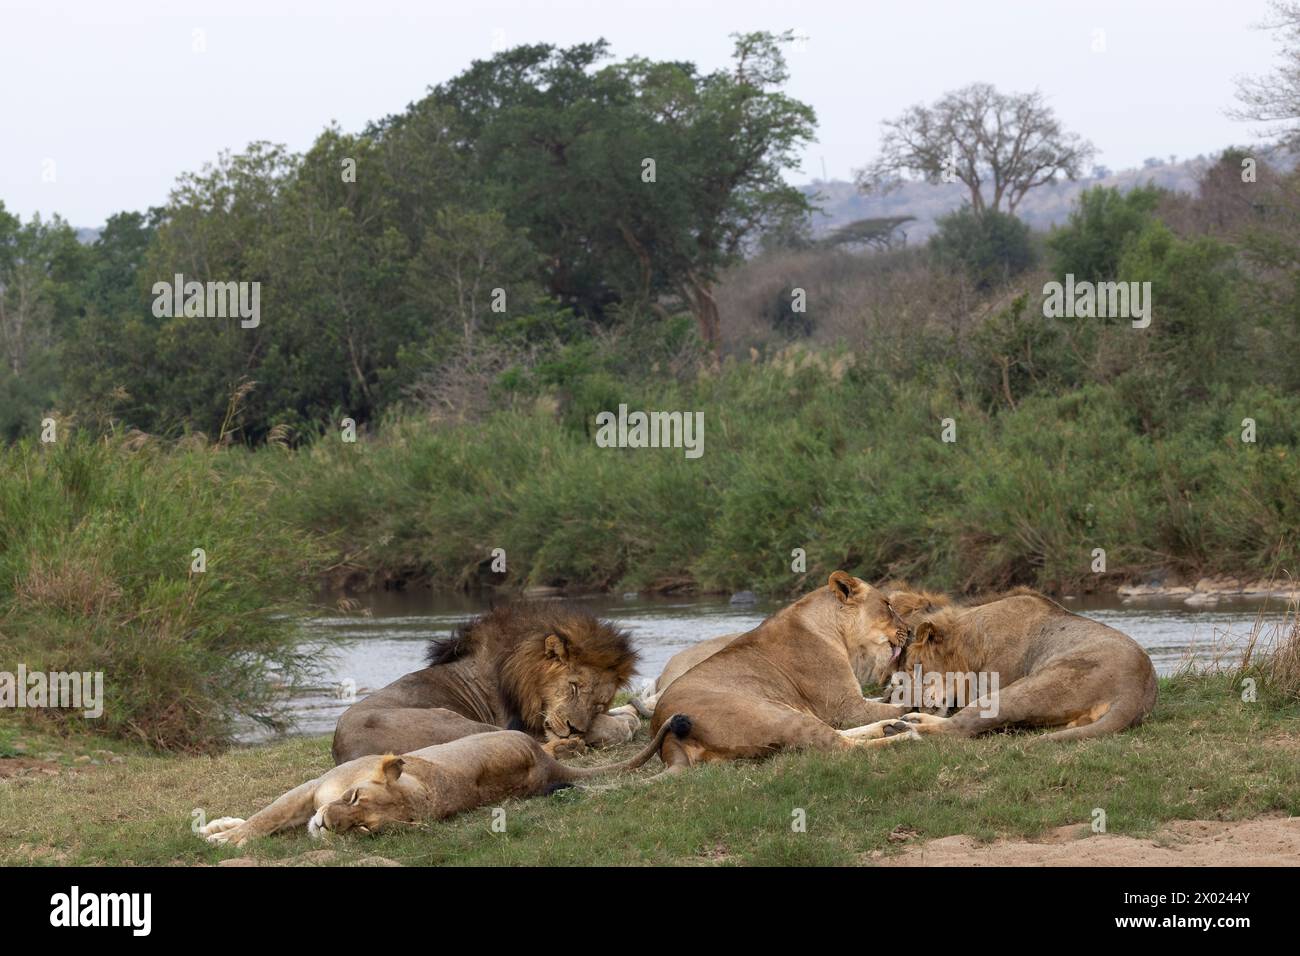 Lions (Panthera leo), Zimanga riserva privata di caccia, KwaZulu-Natal, Sudafrica Foto Stock